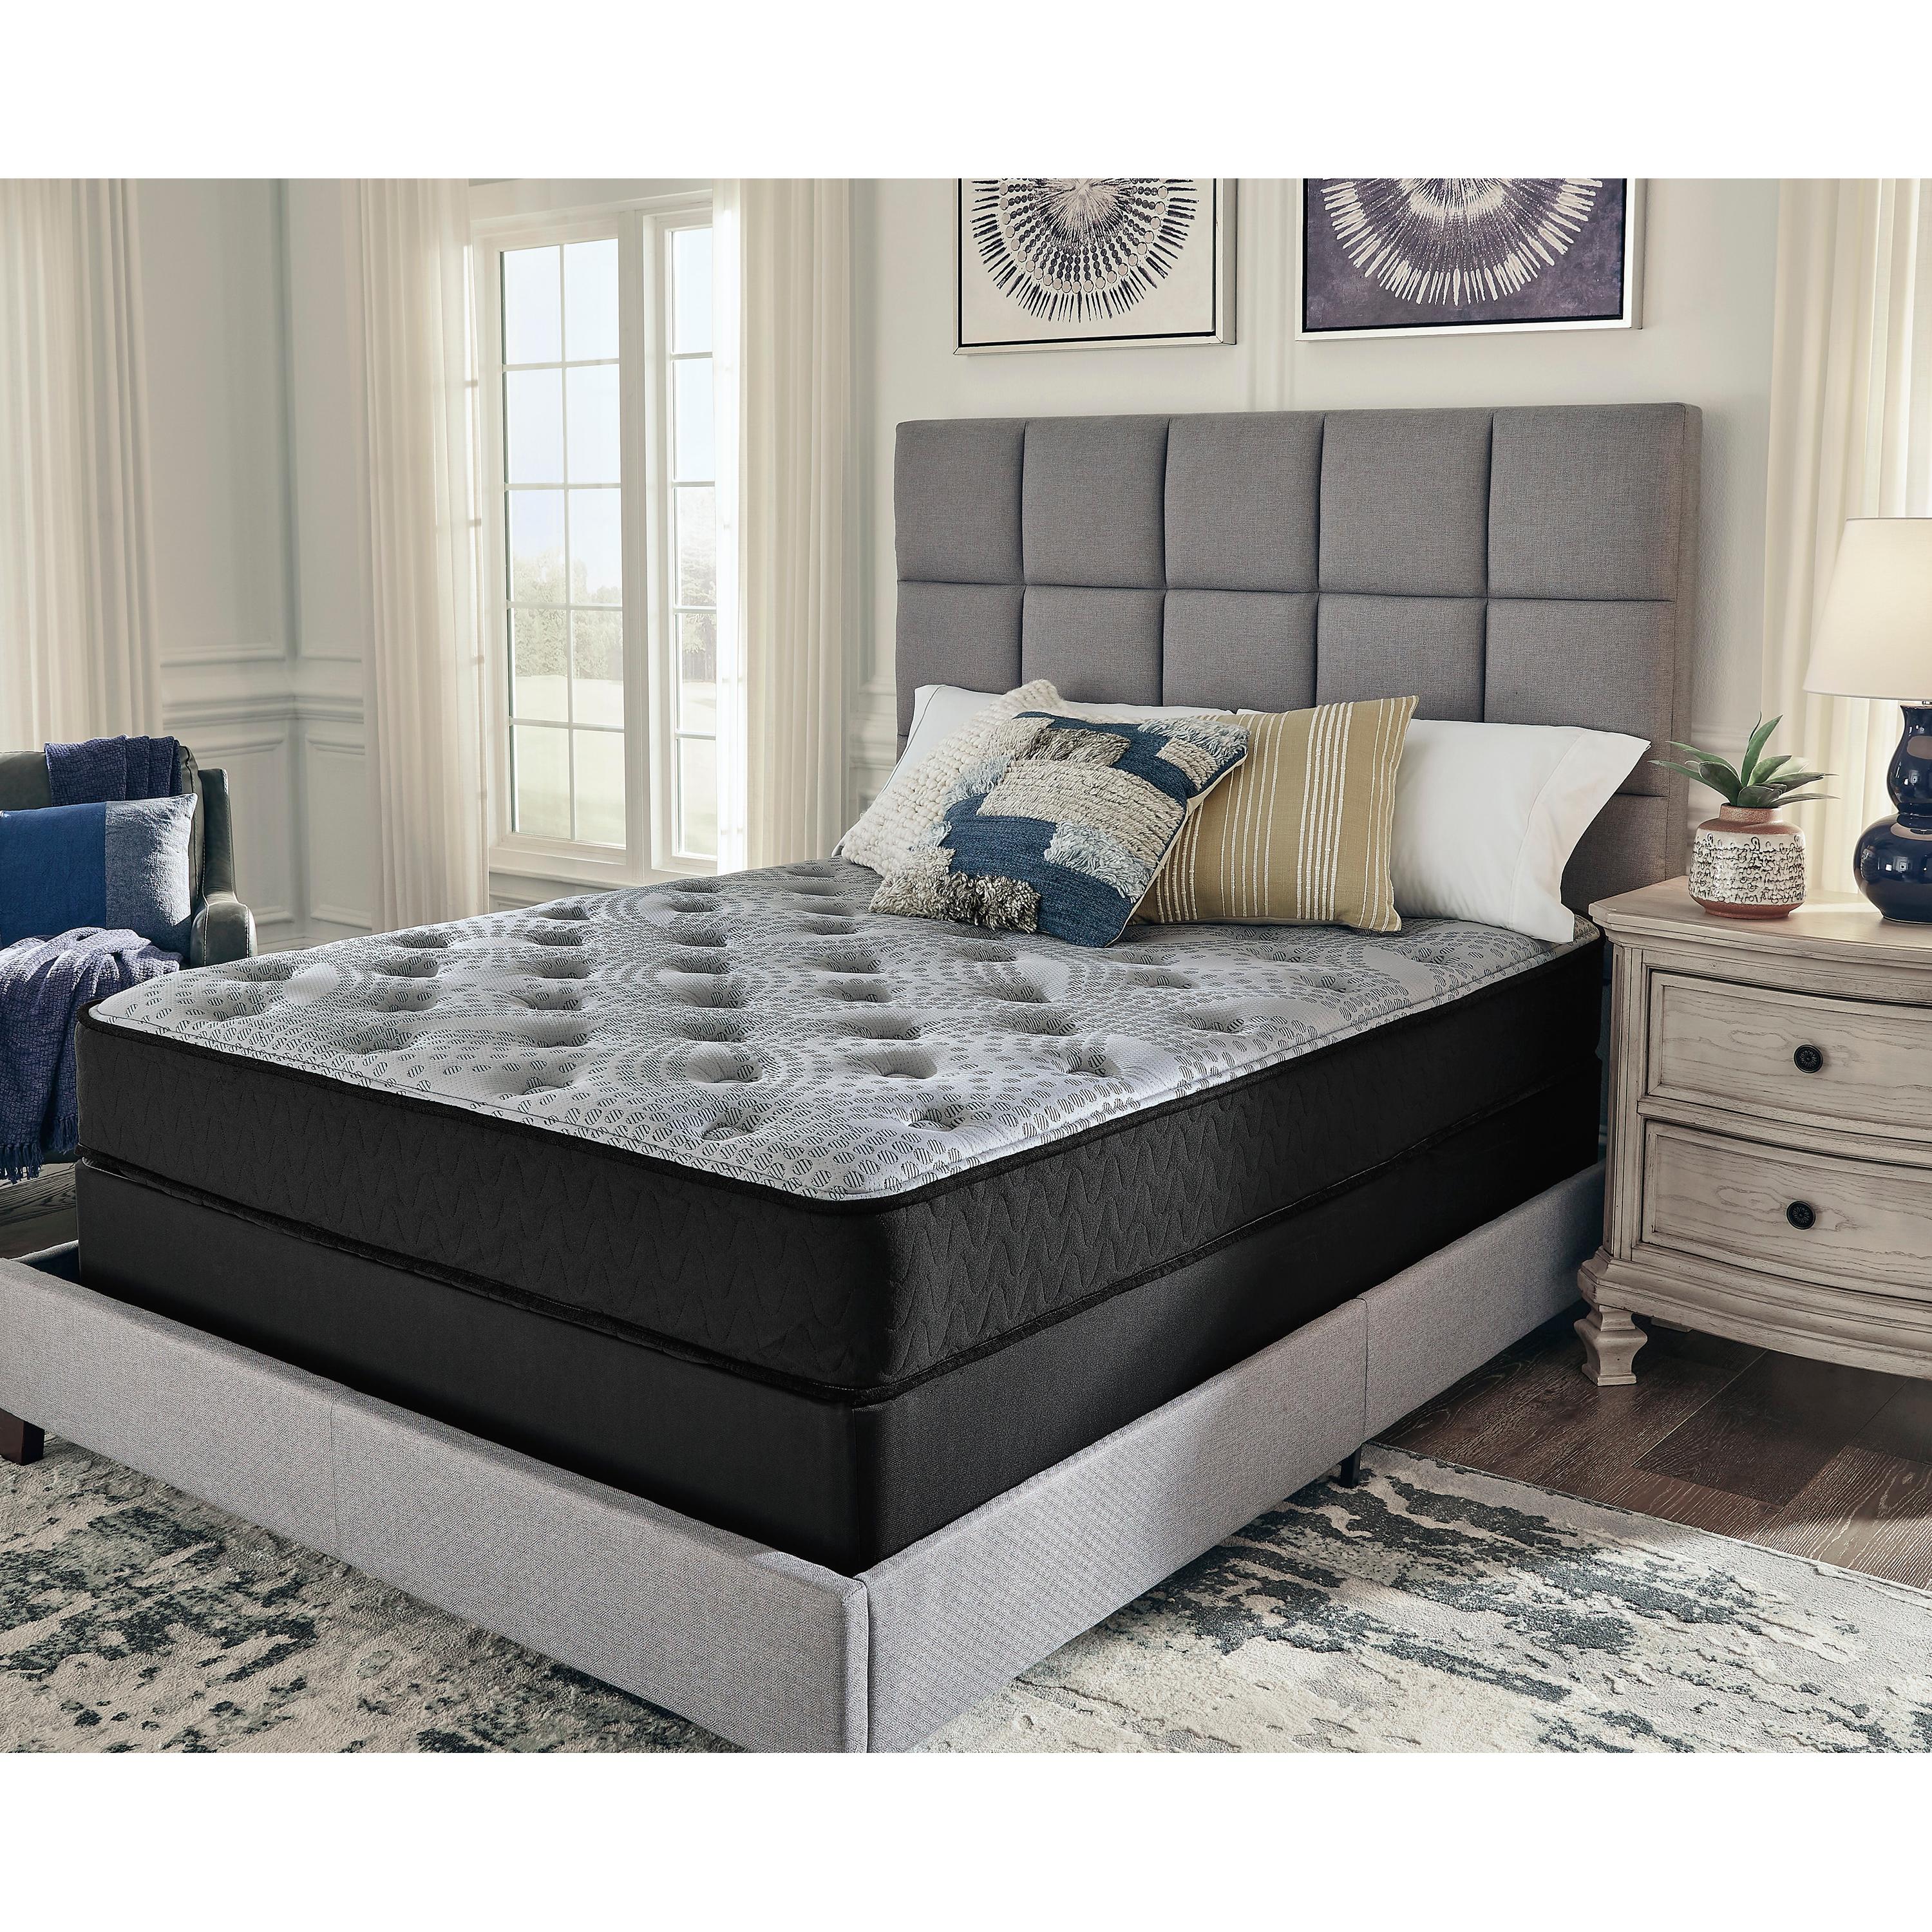 Sierra Sleep Comfort Plus M50931 Queen Mattress